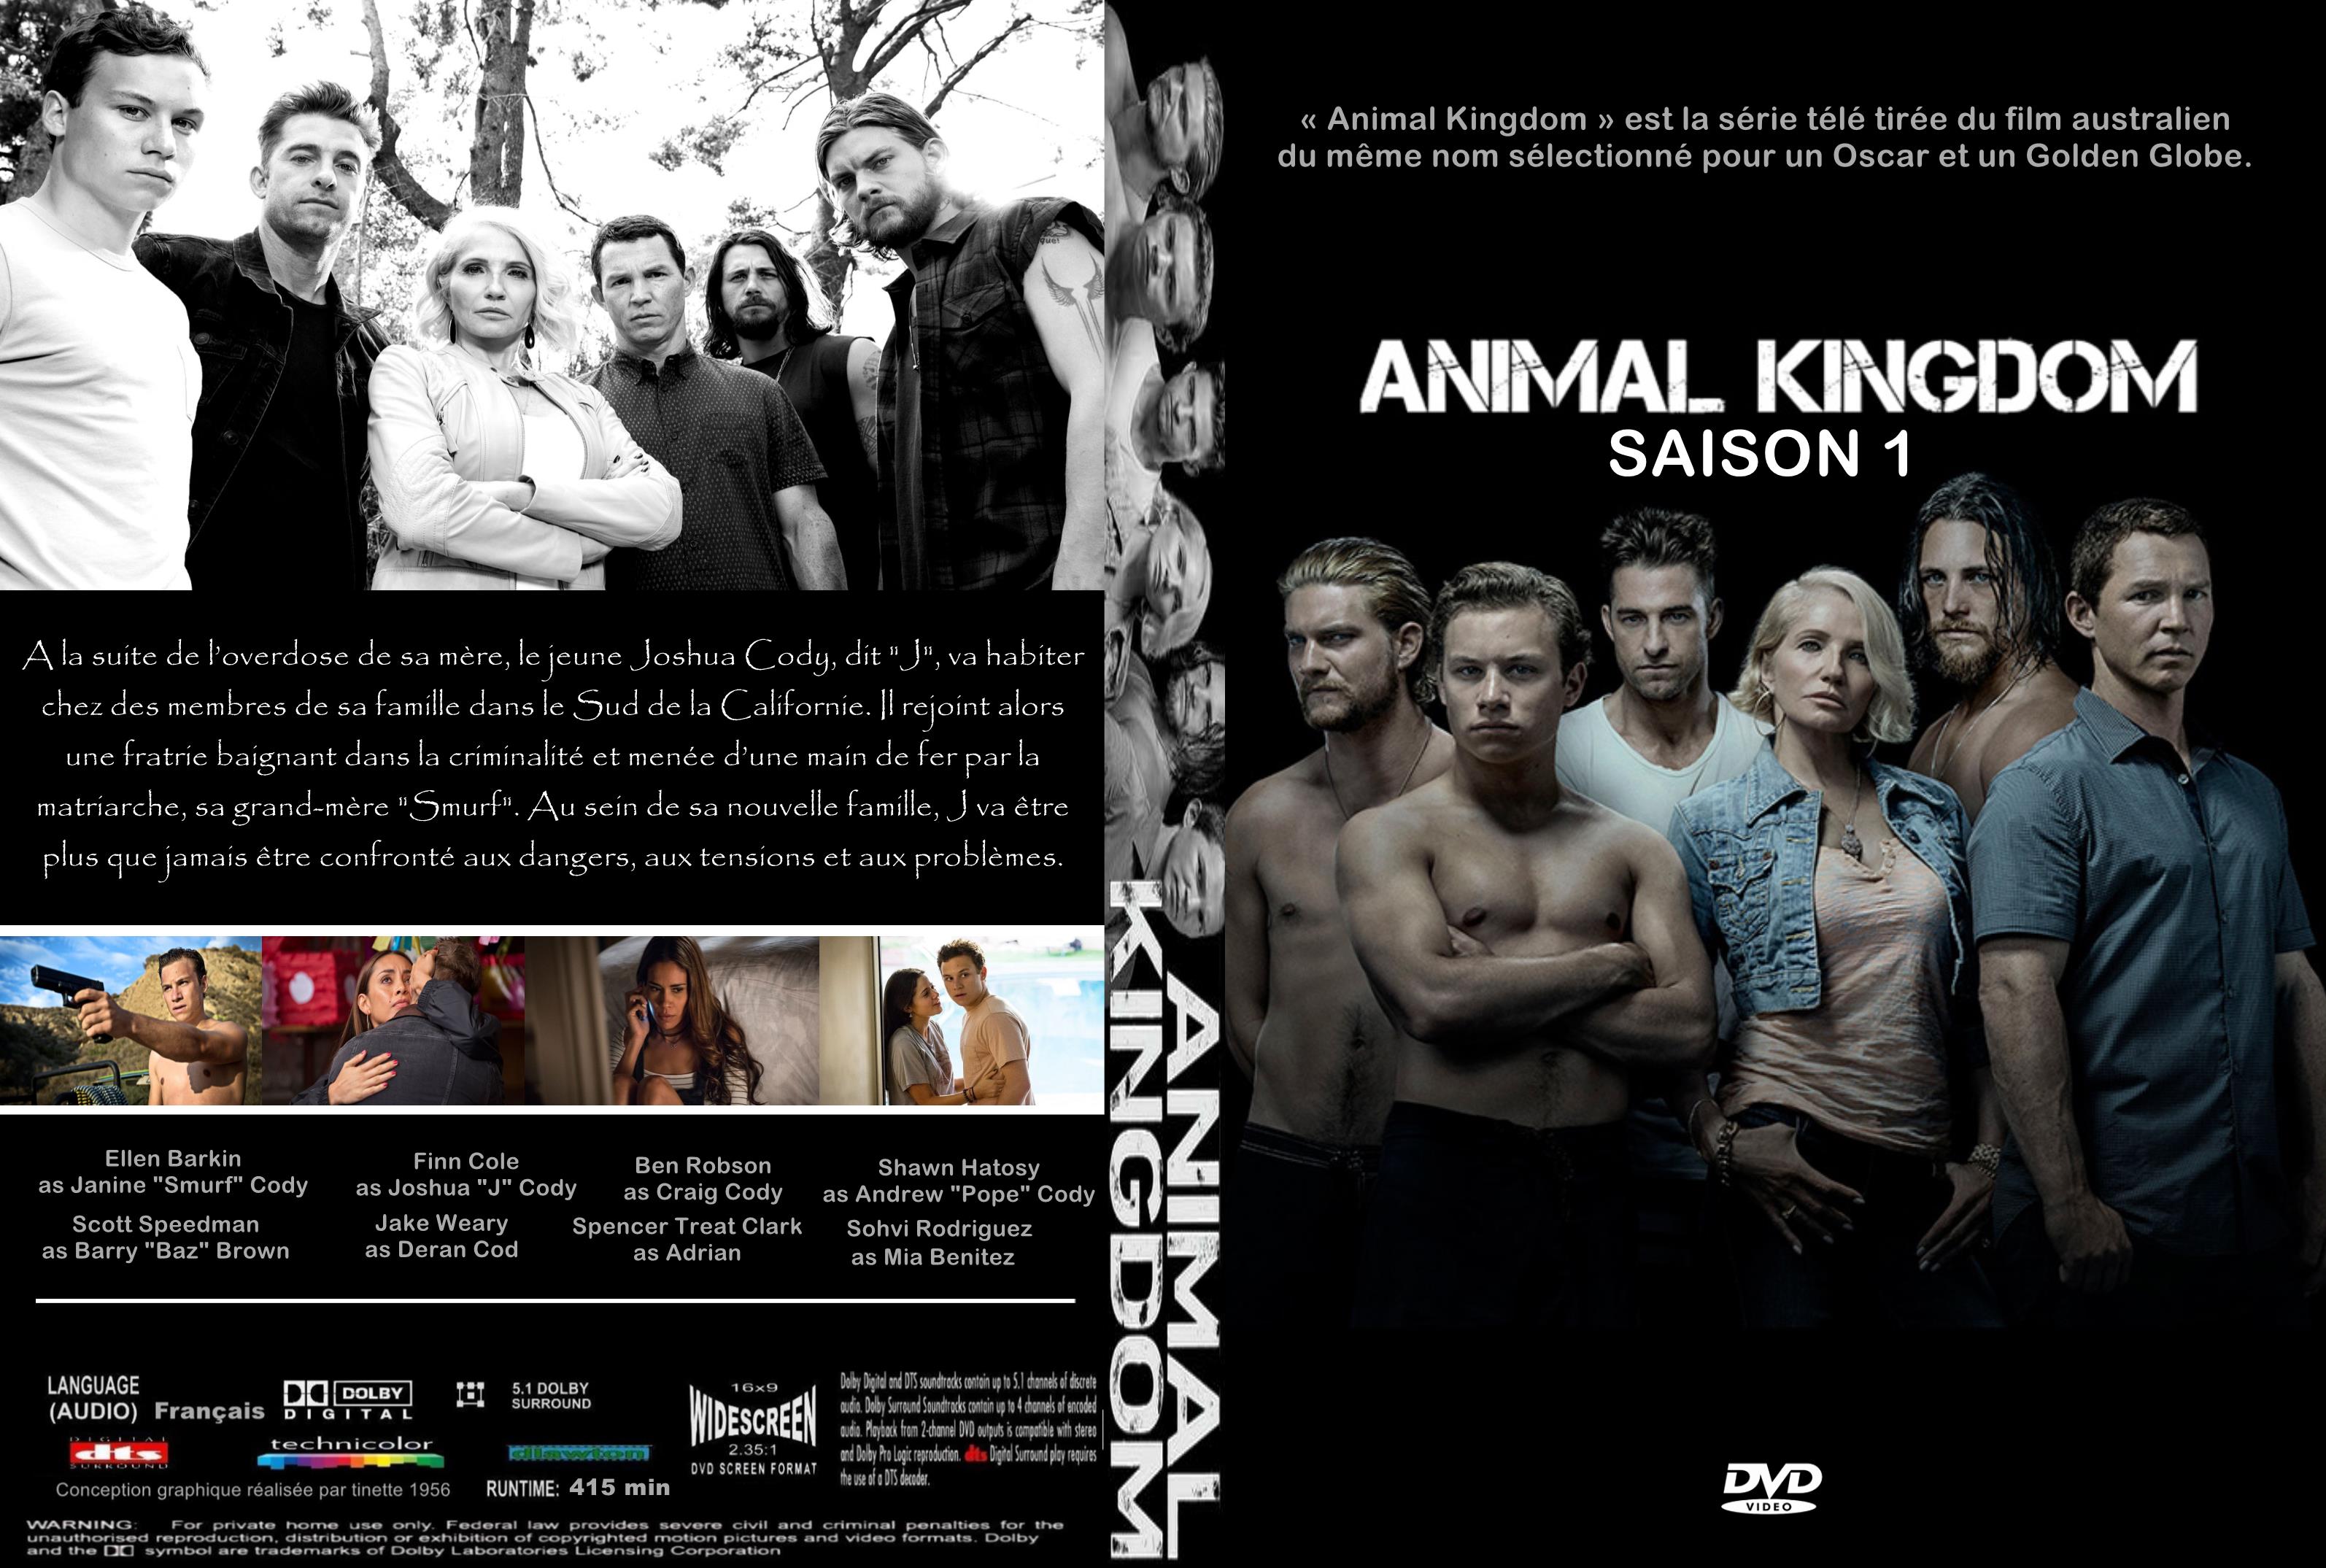 Jaquette DVD Animal Kingdom saison 1 custom